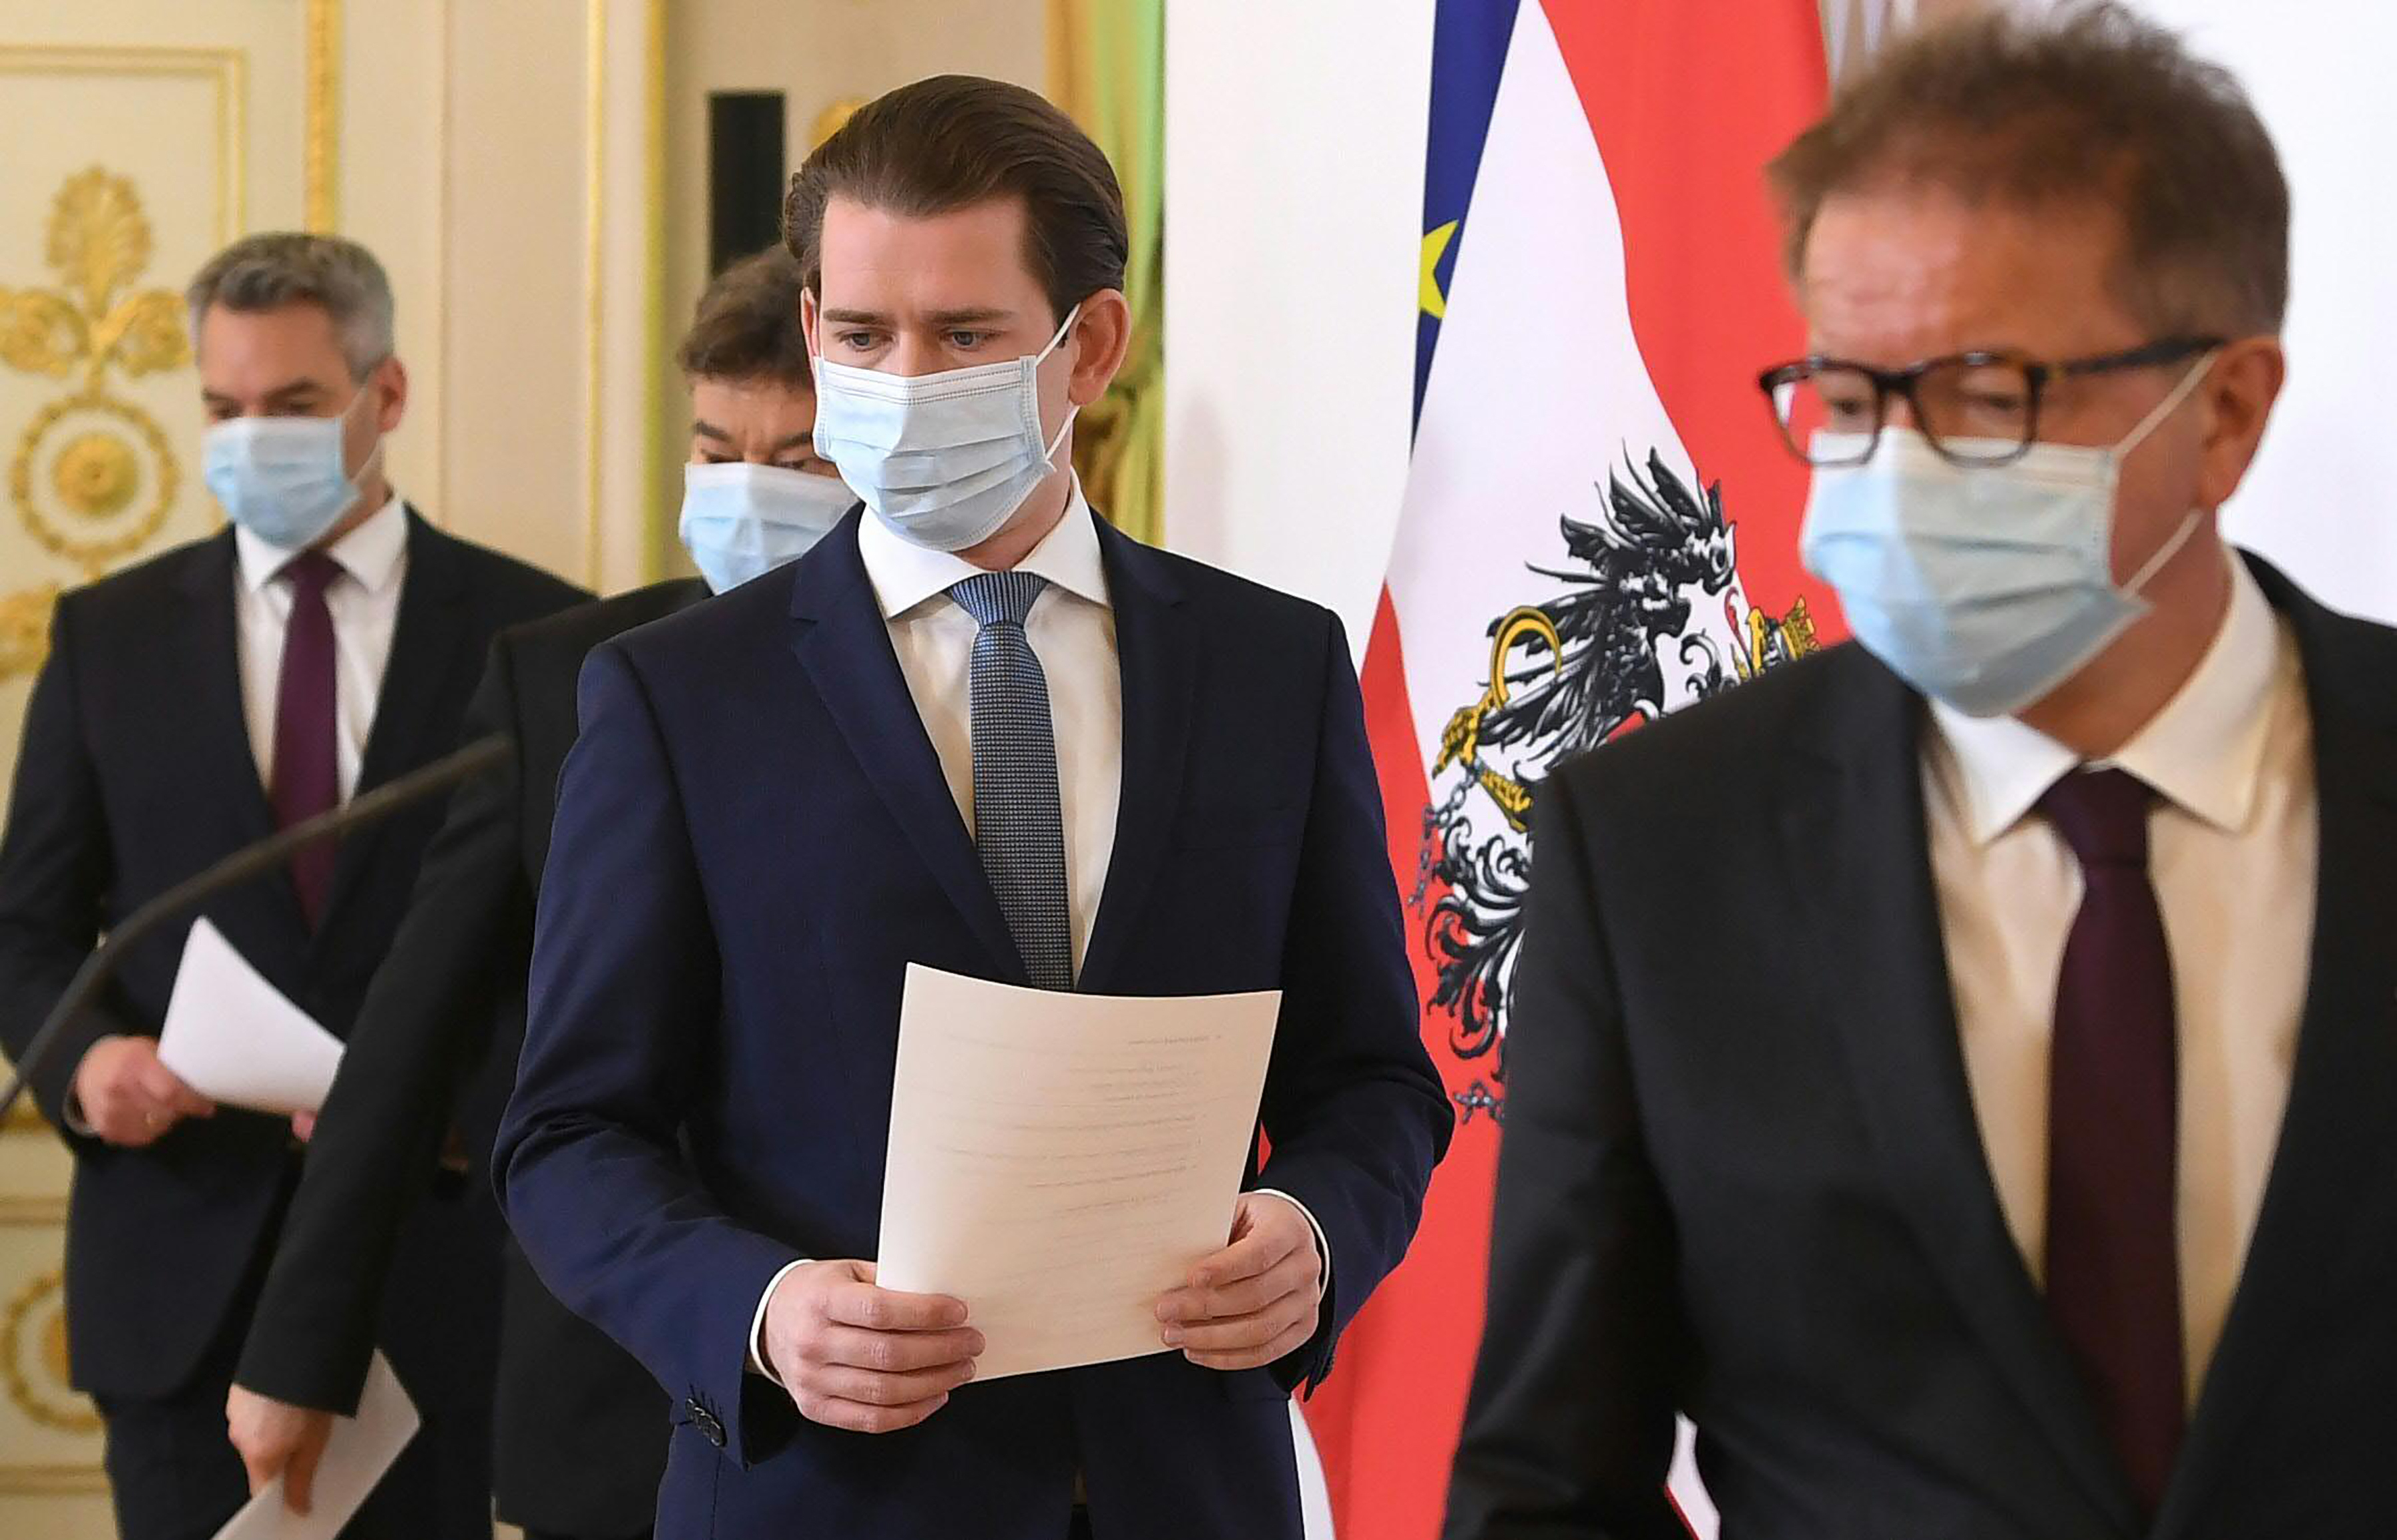 Austrian Chancellor Sebastian Kurz, center, arrives for a news conference about the coronavirus outbreak in Vienna, Austria, on April 6.